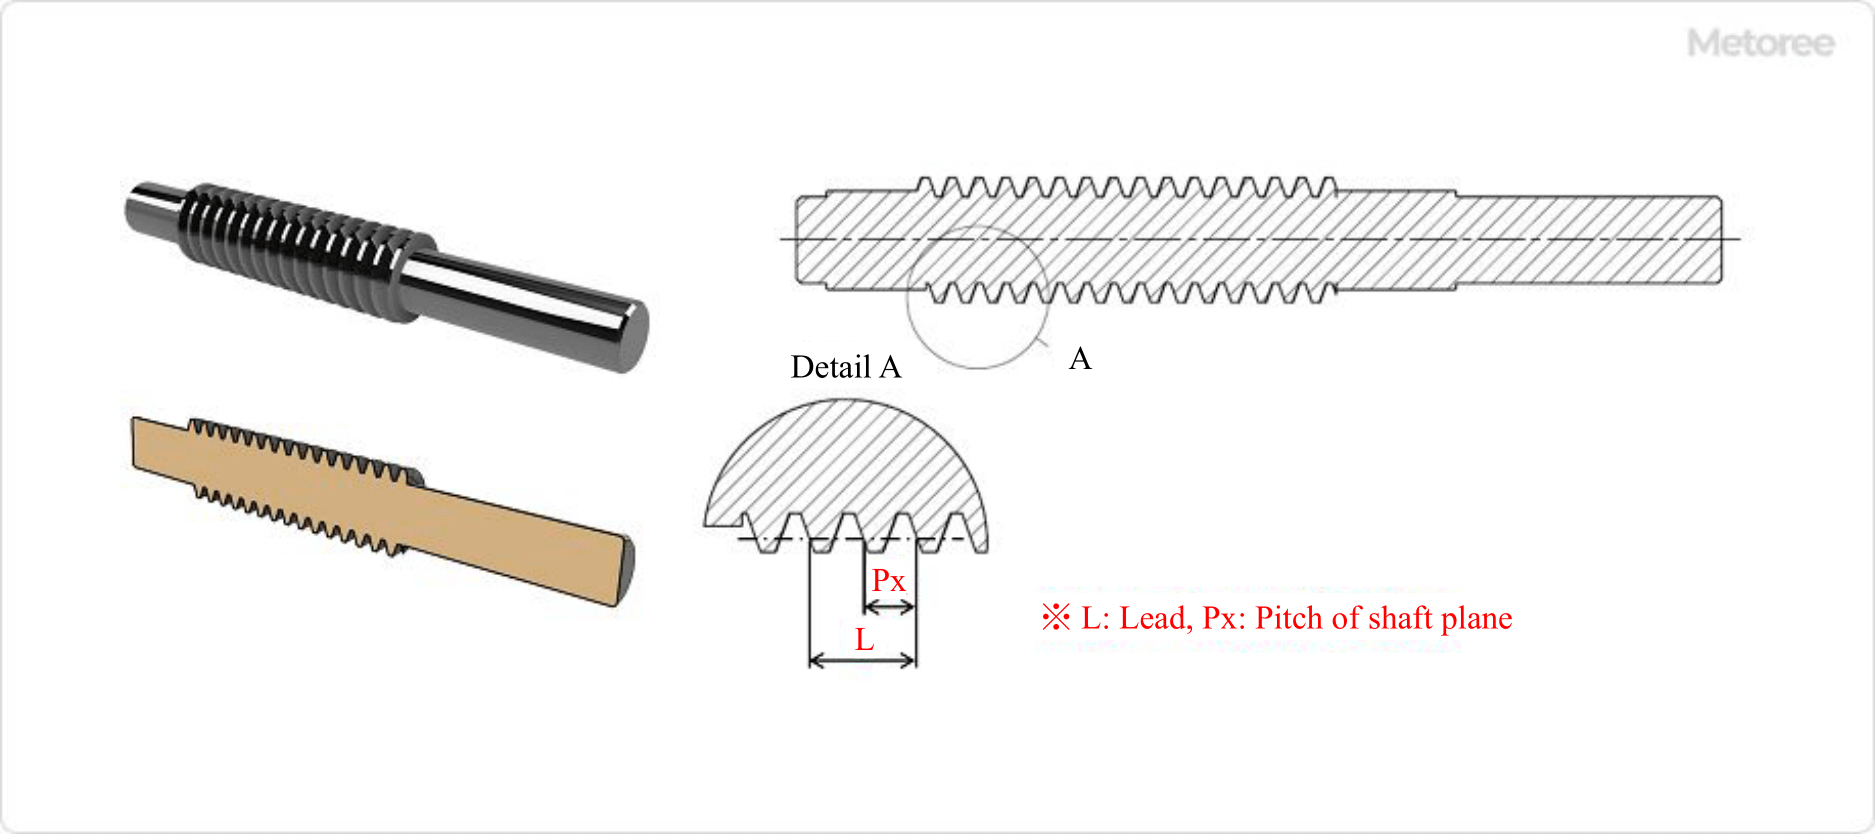 Figure 5. Worm dimensions